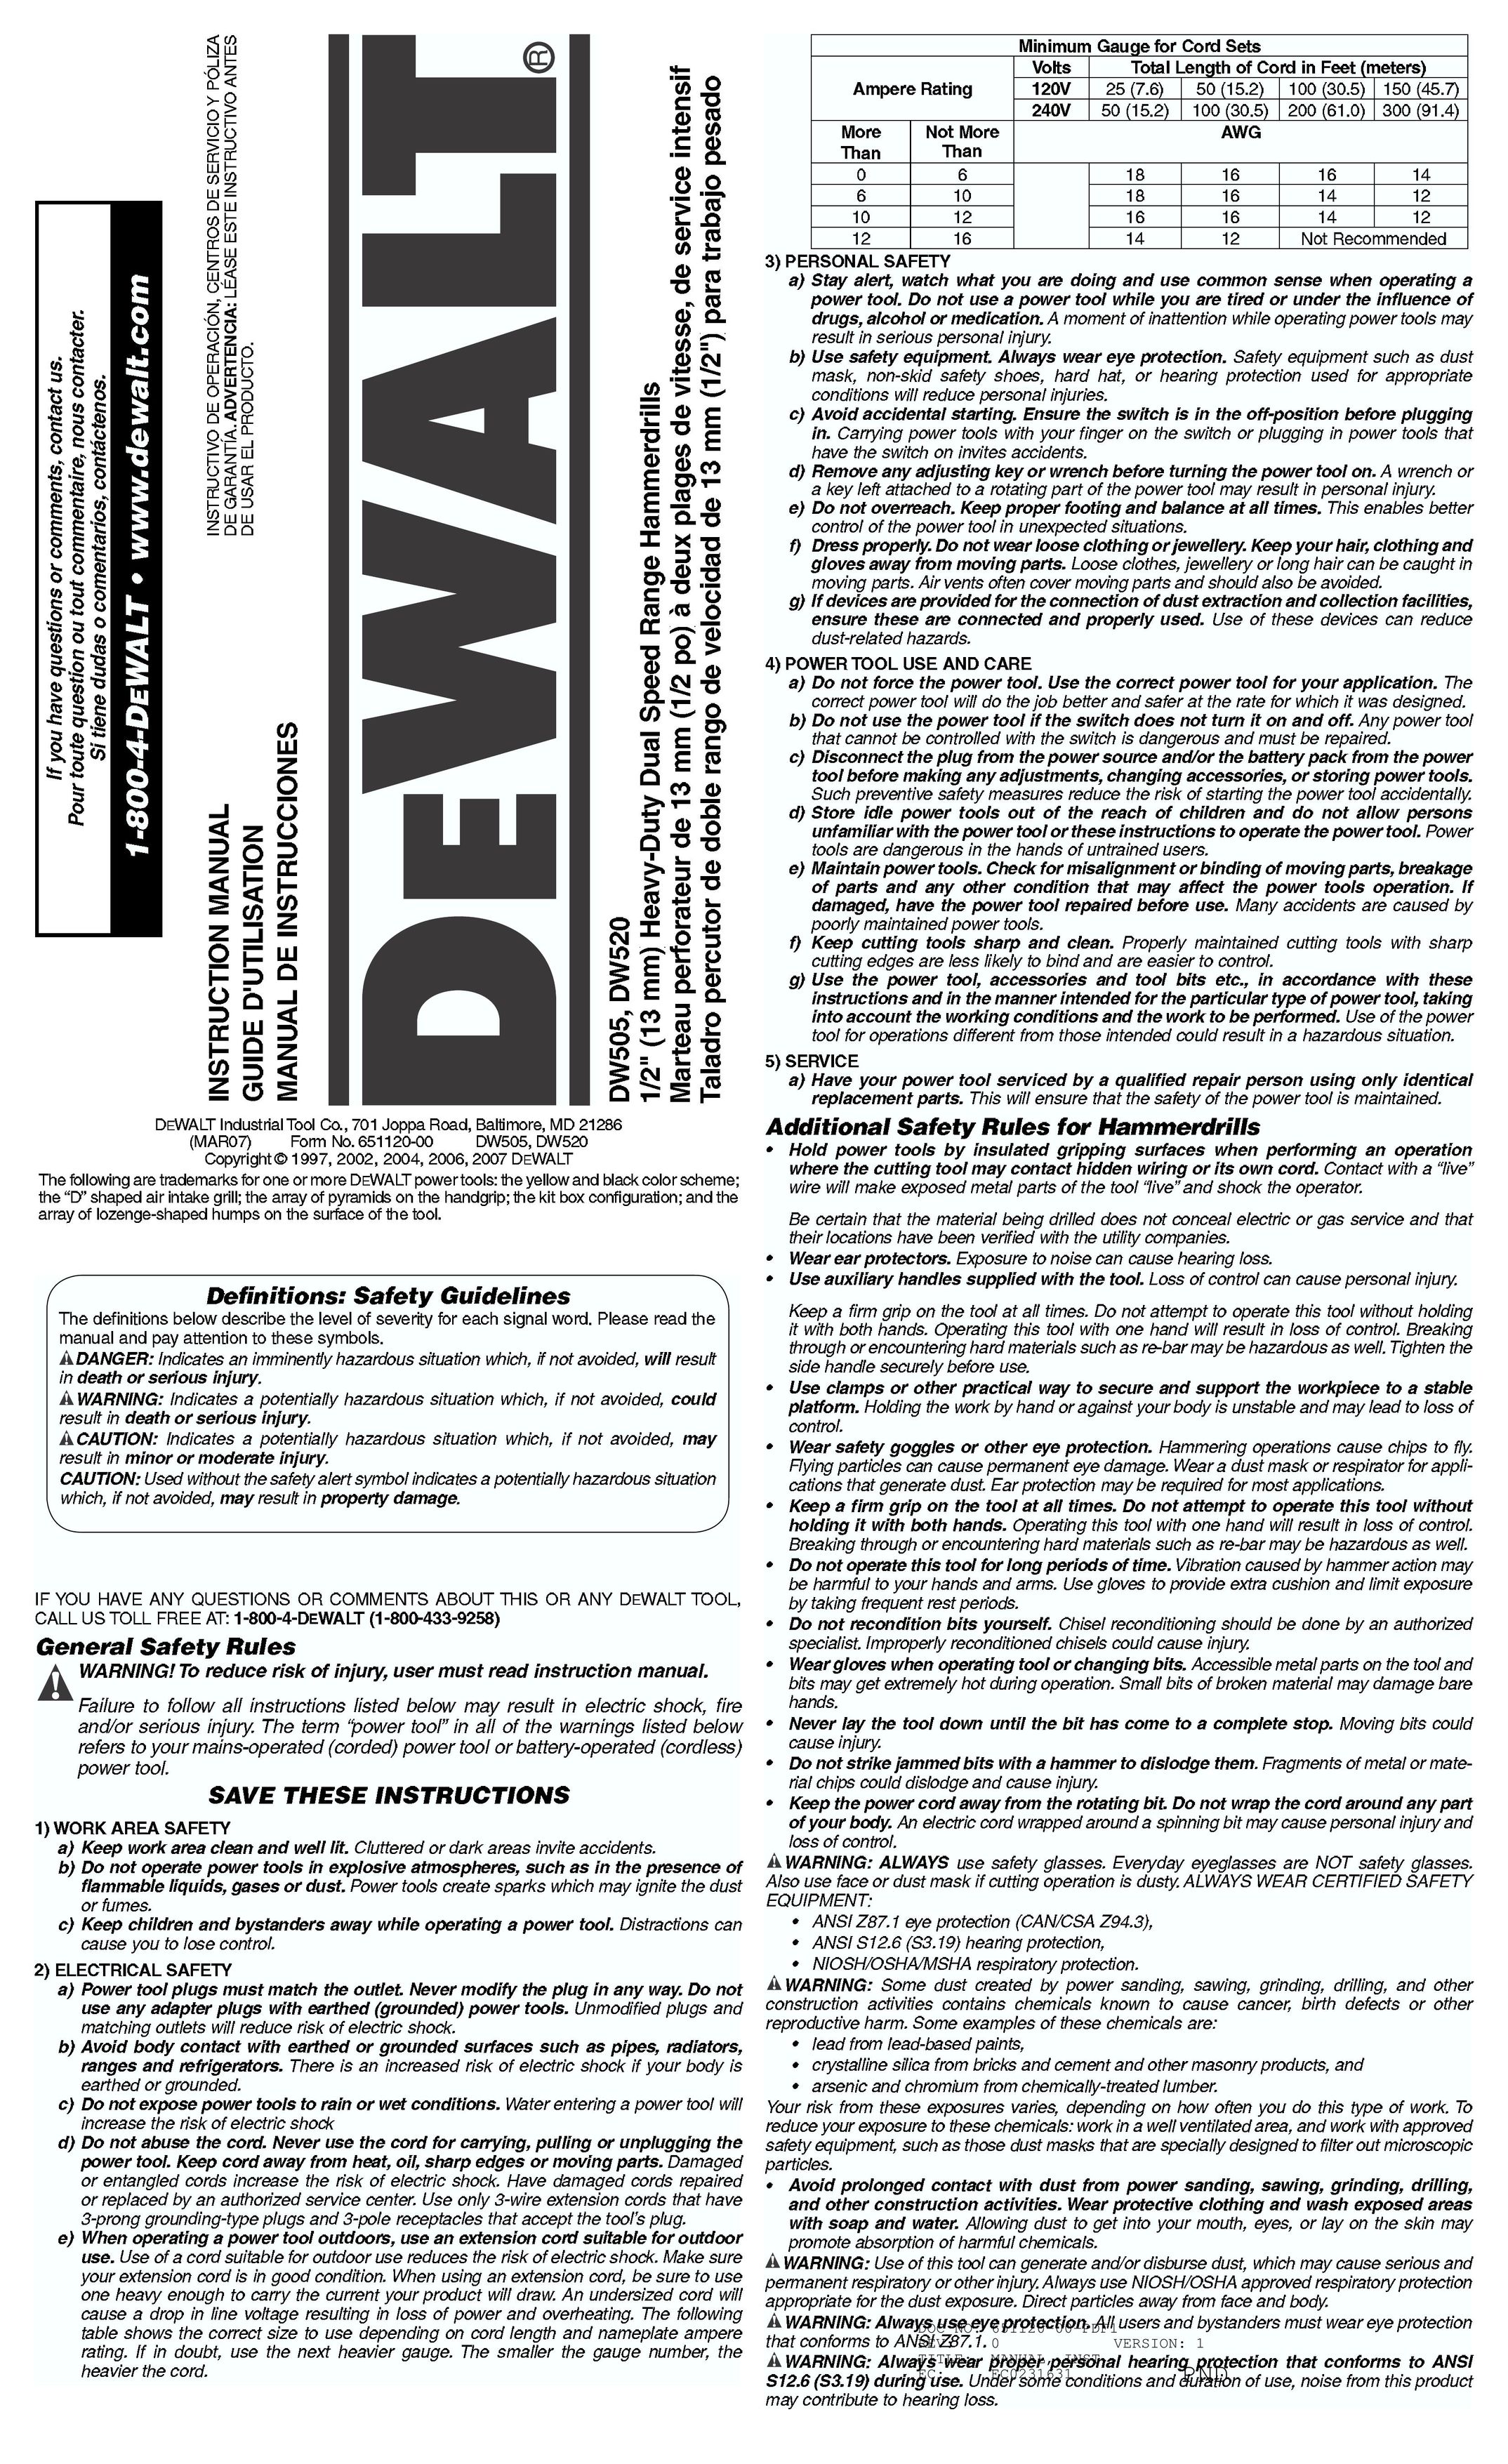 DeWalt DW505K Drill User Manual